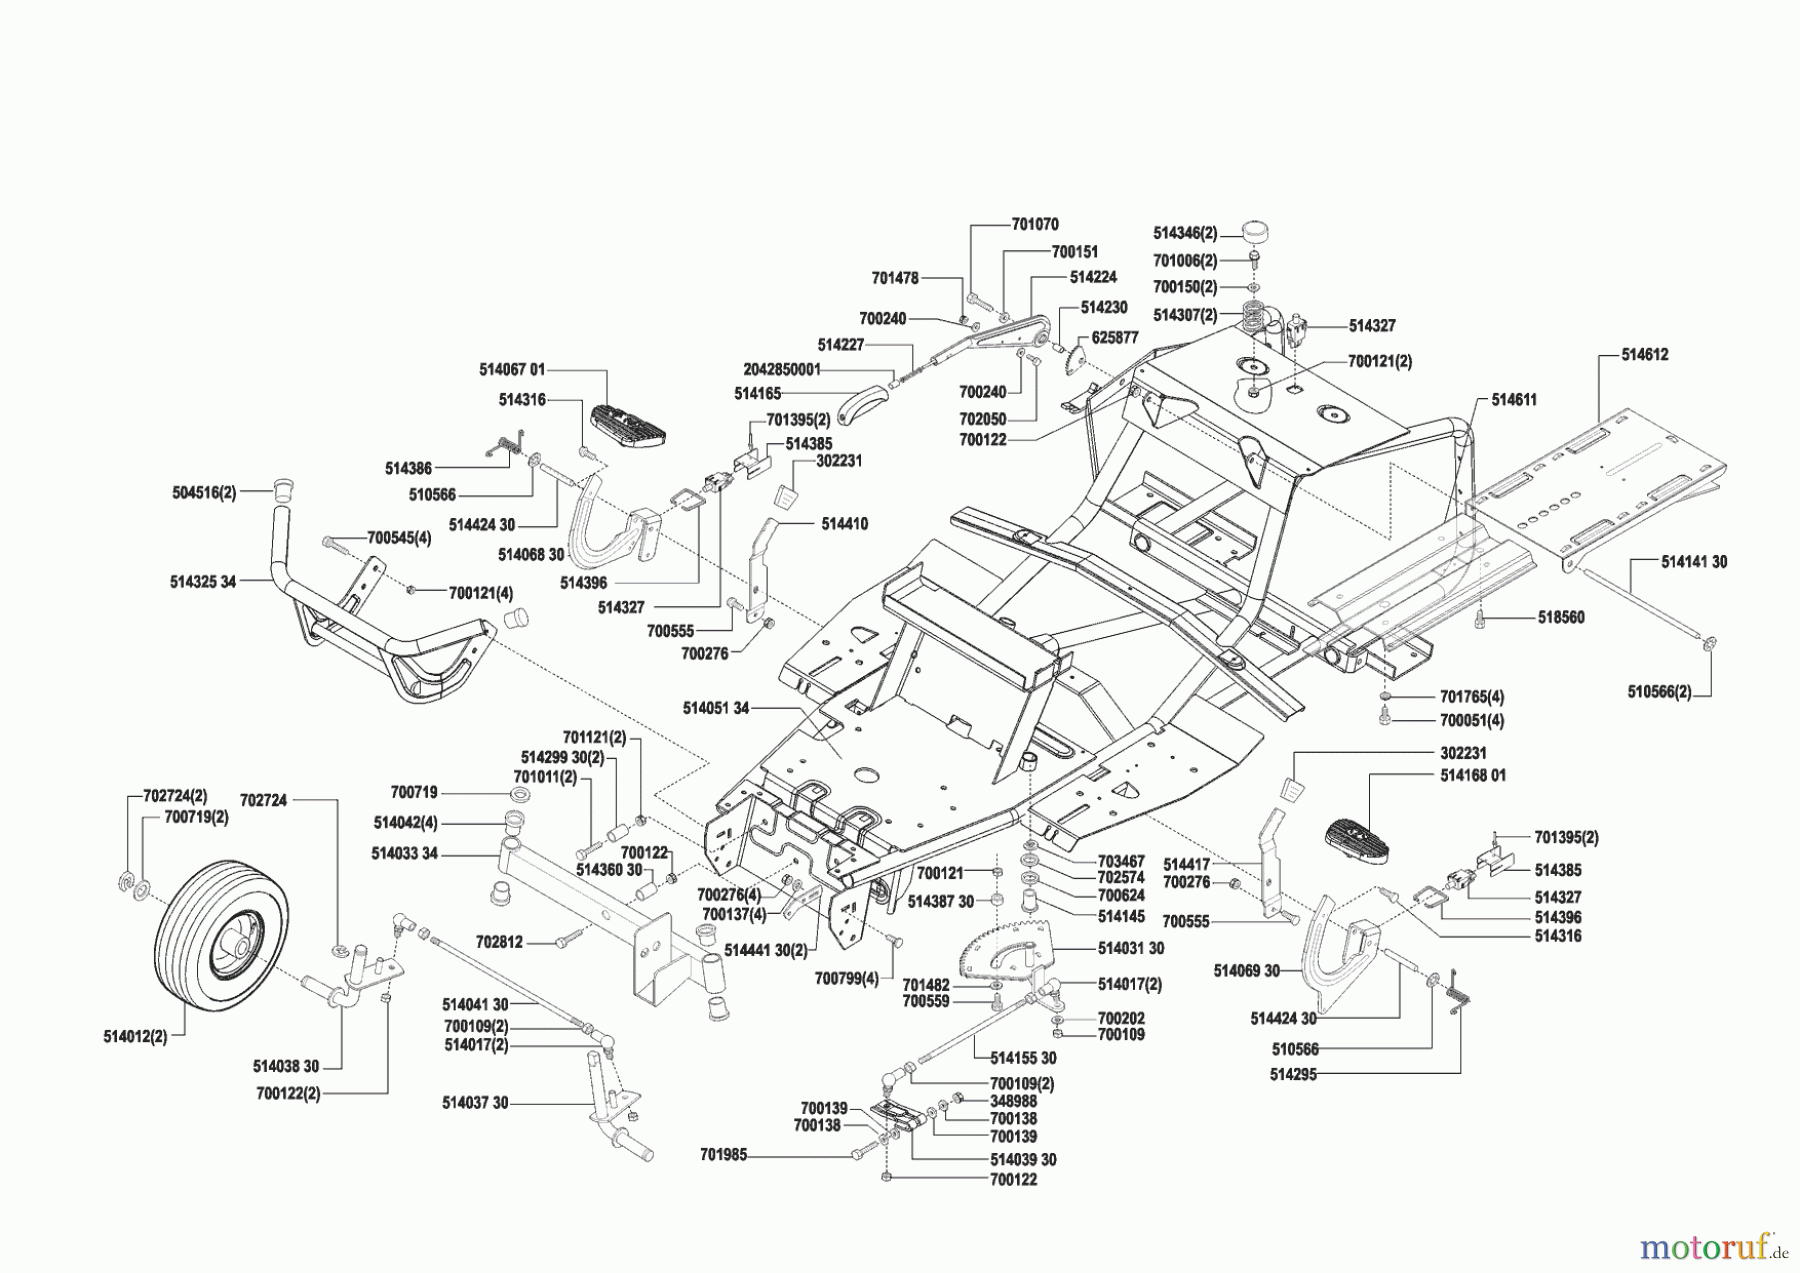  Concord Gartentechnik Rasentraktor T12-85 Seite 2